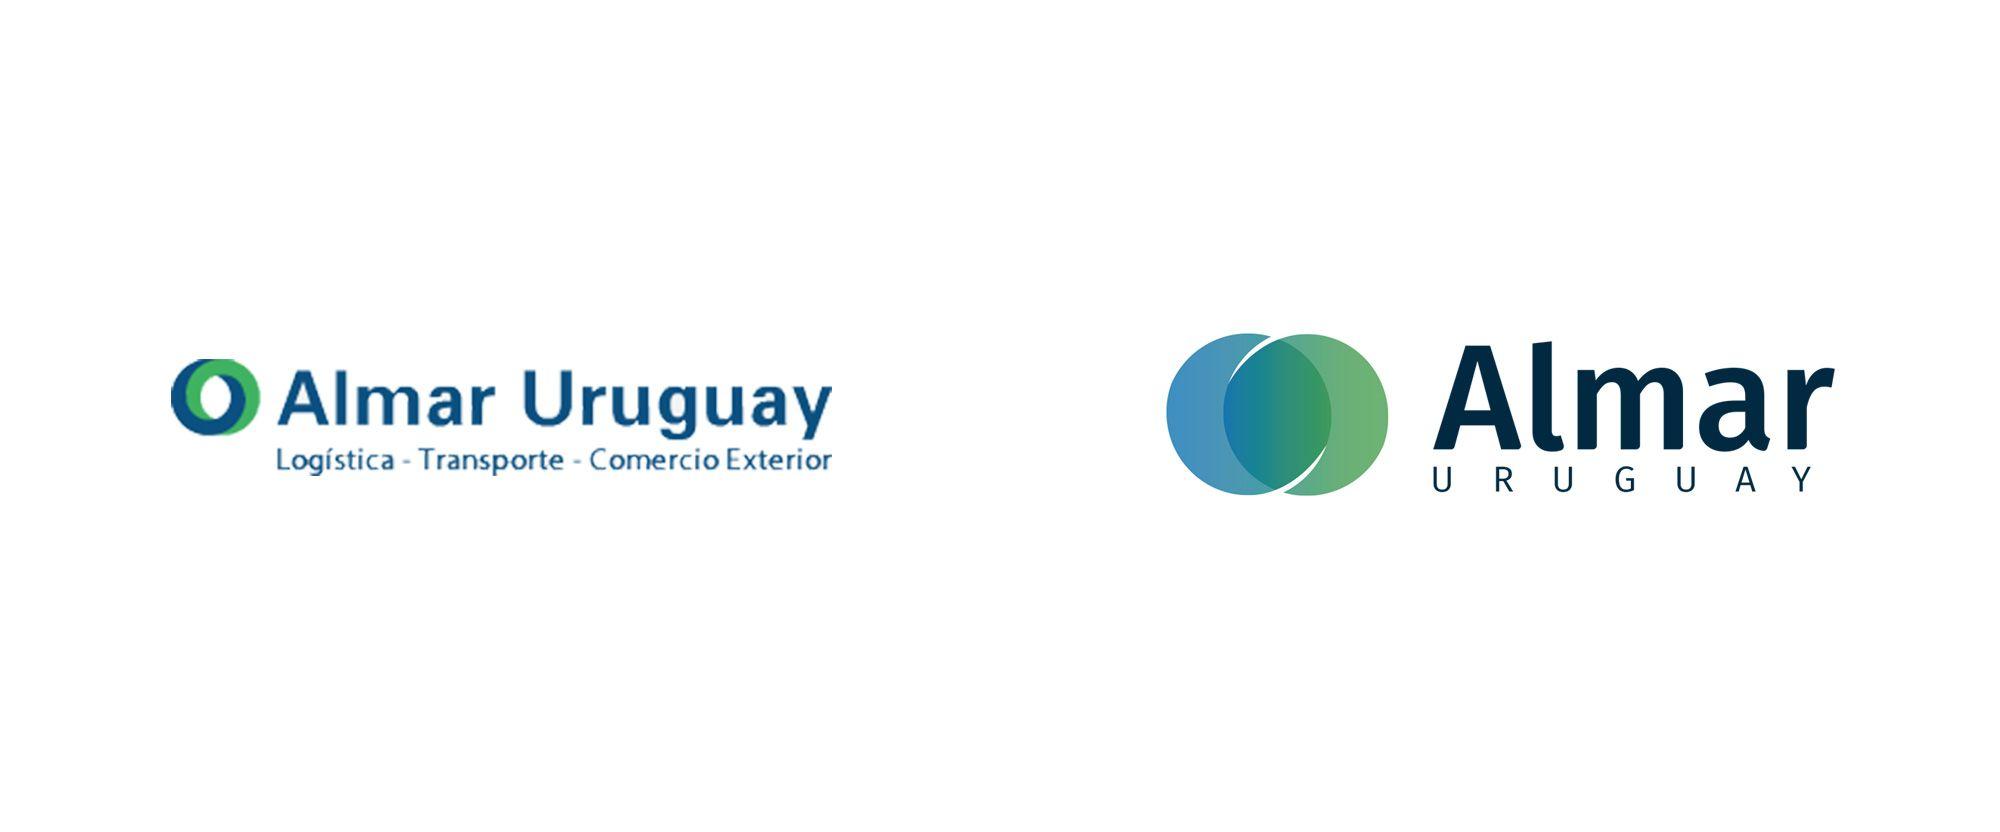 Uruguay Logo - Brand New: New Logo for Almar Uruguay by Cruz Creative